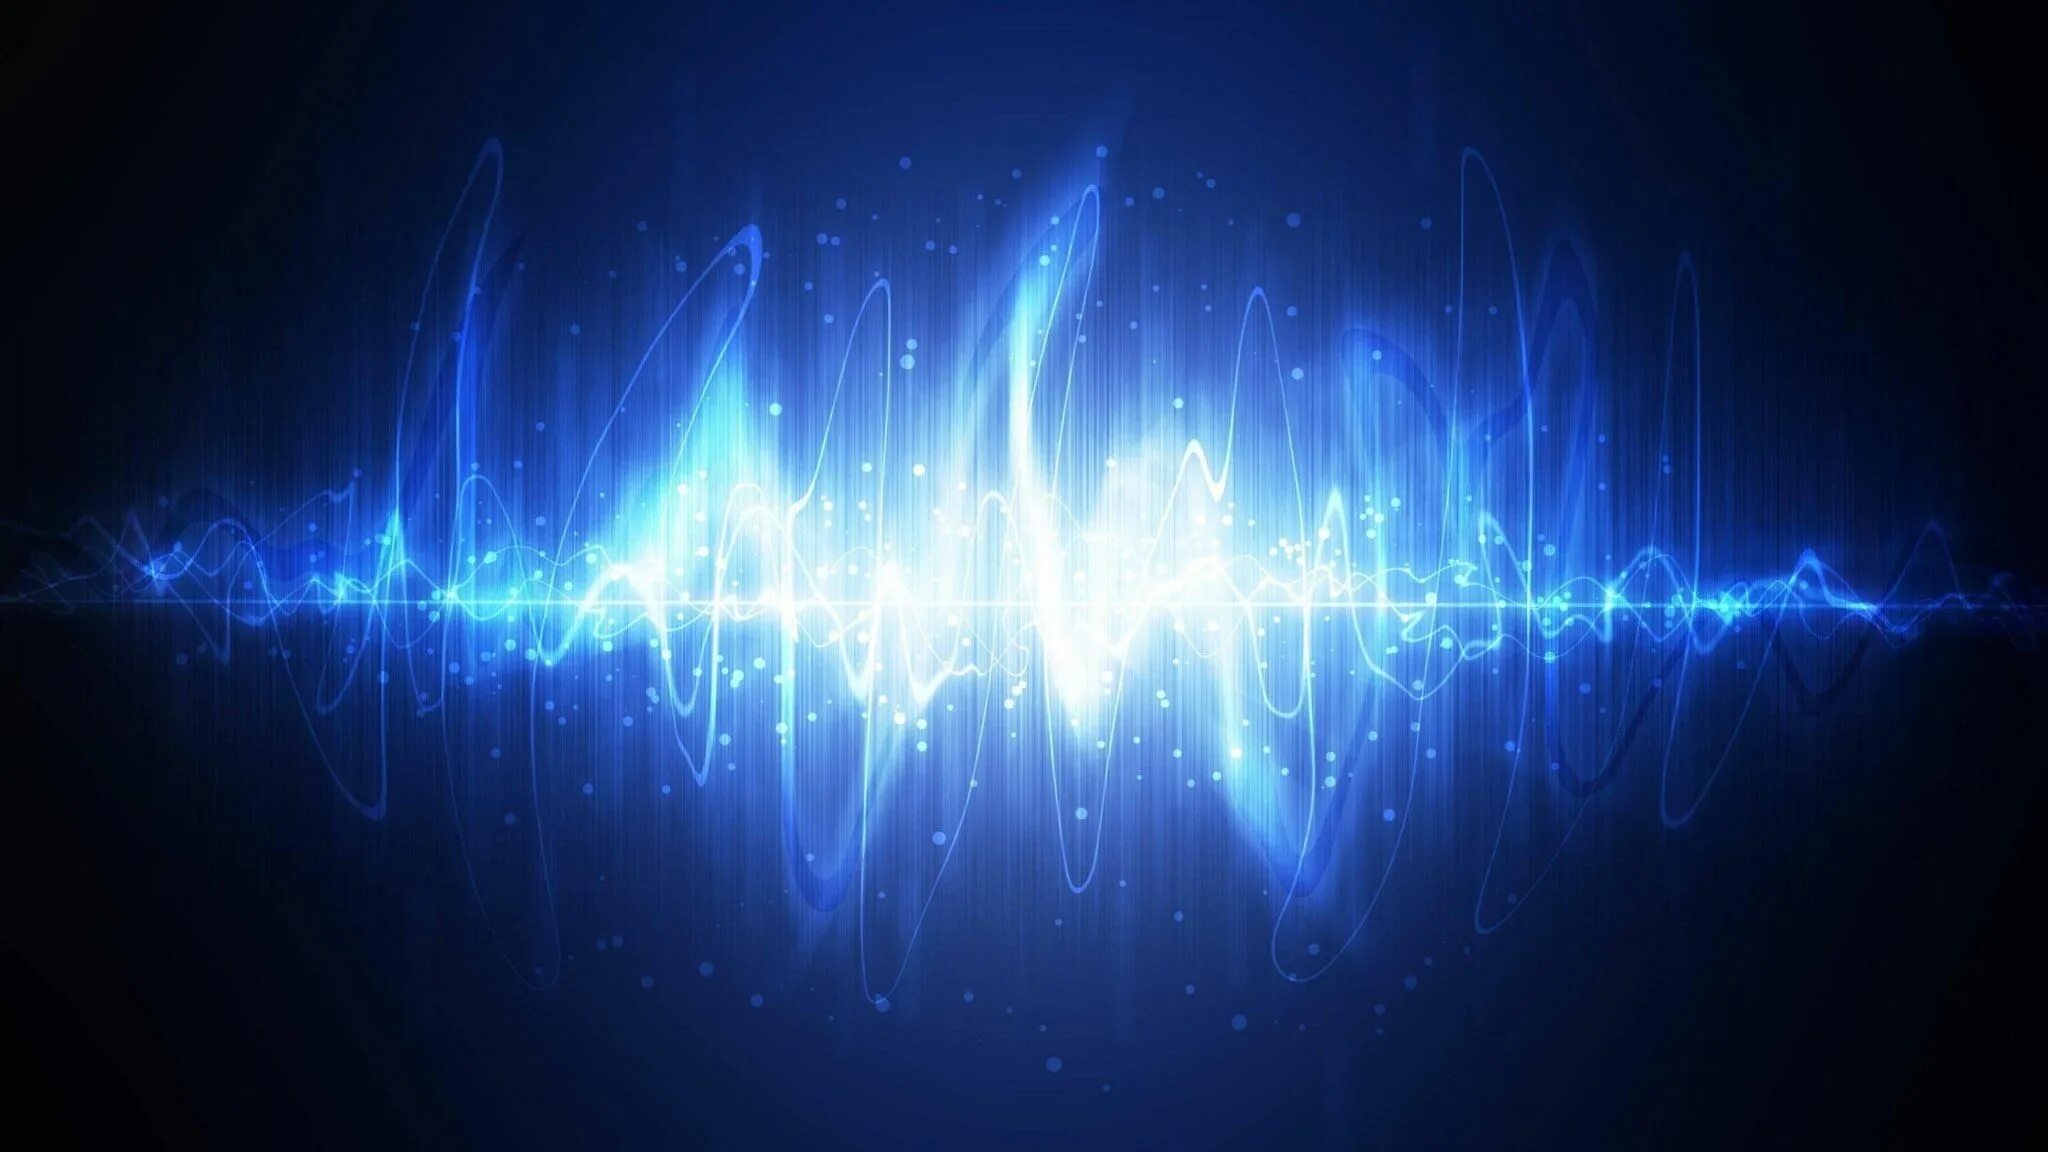 Ask frequency. Звуковая волна. Звуковые волны фон. Волны звука. Музыкальная волна.